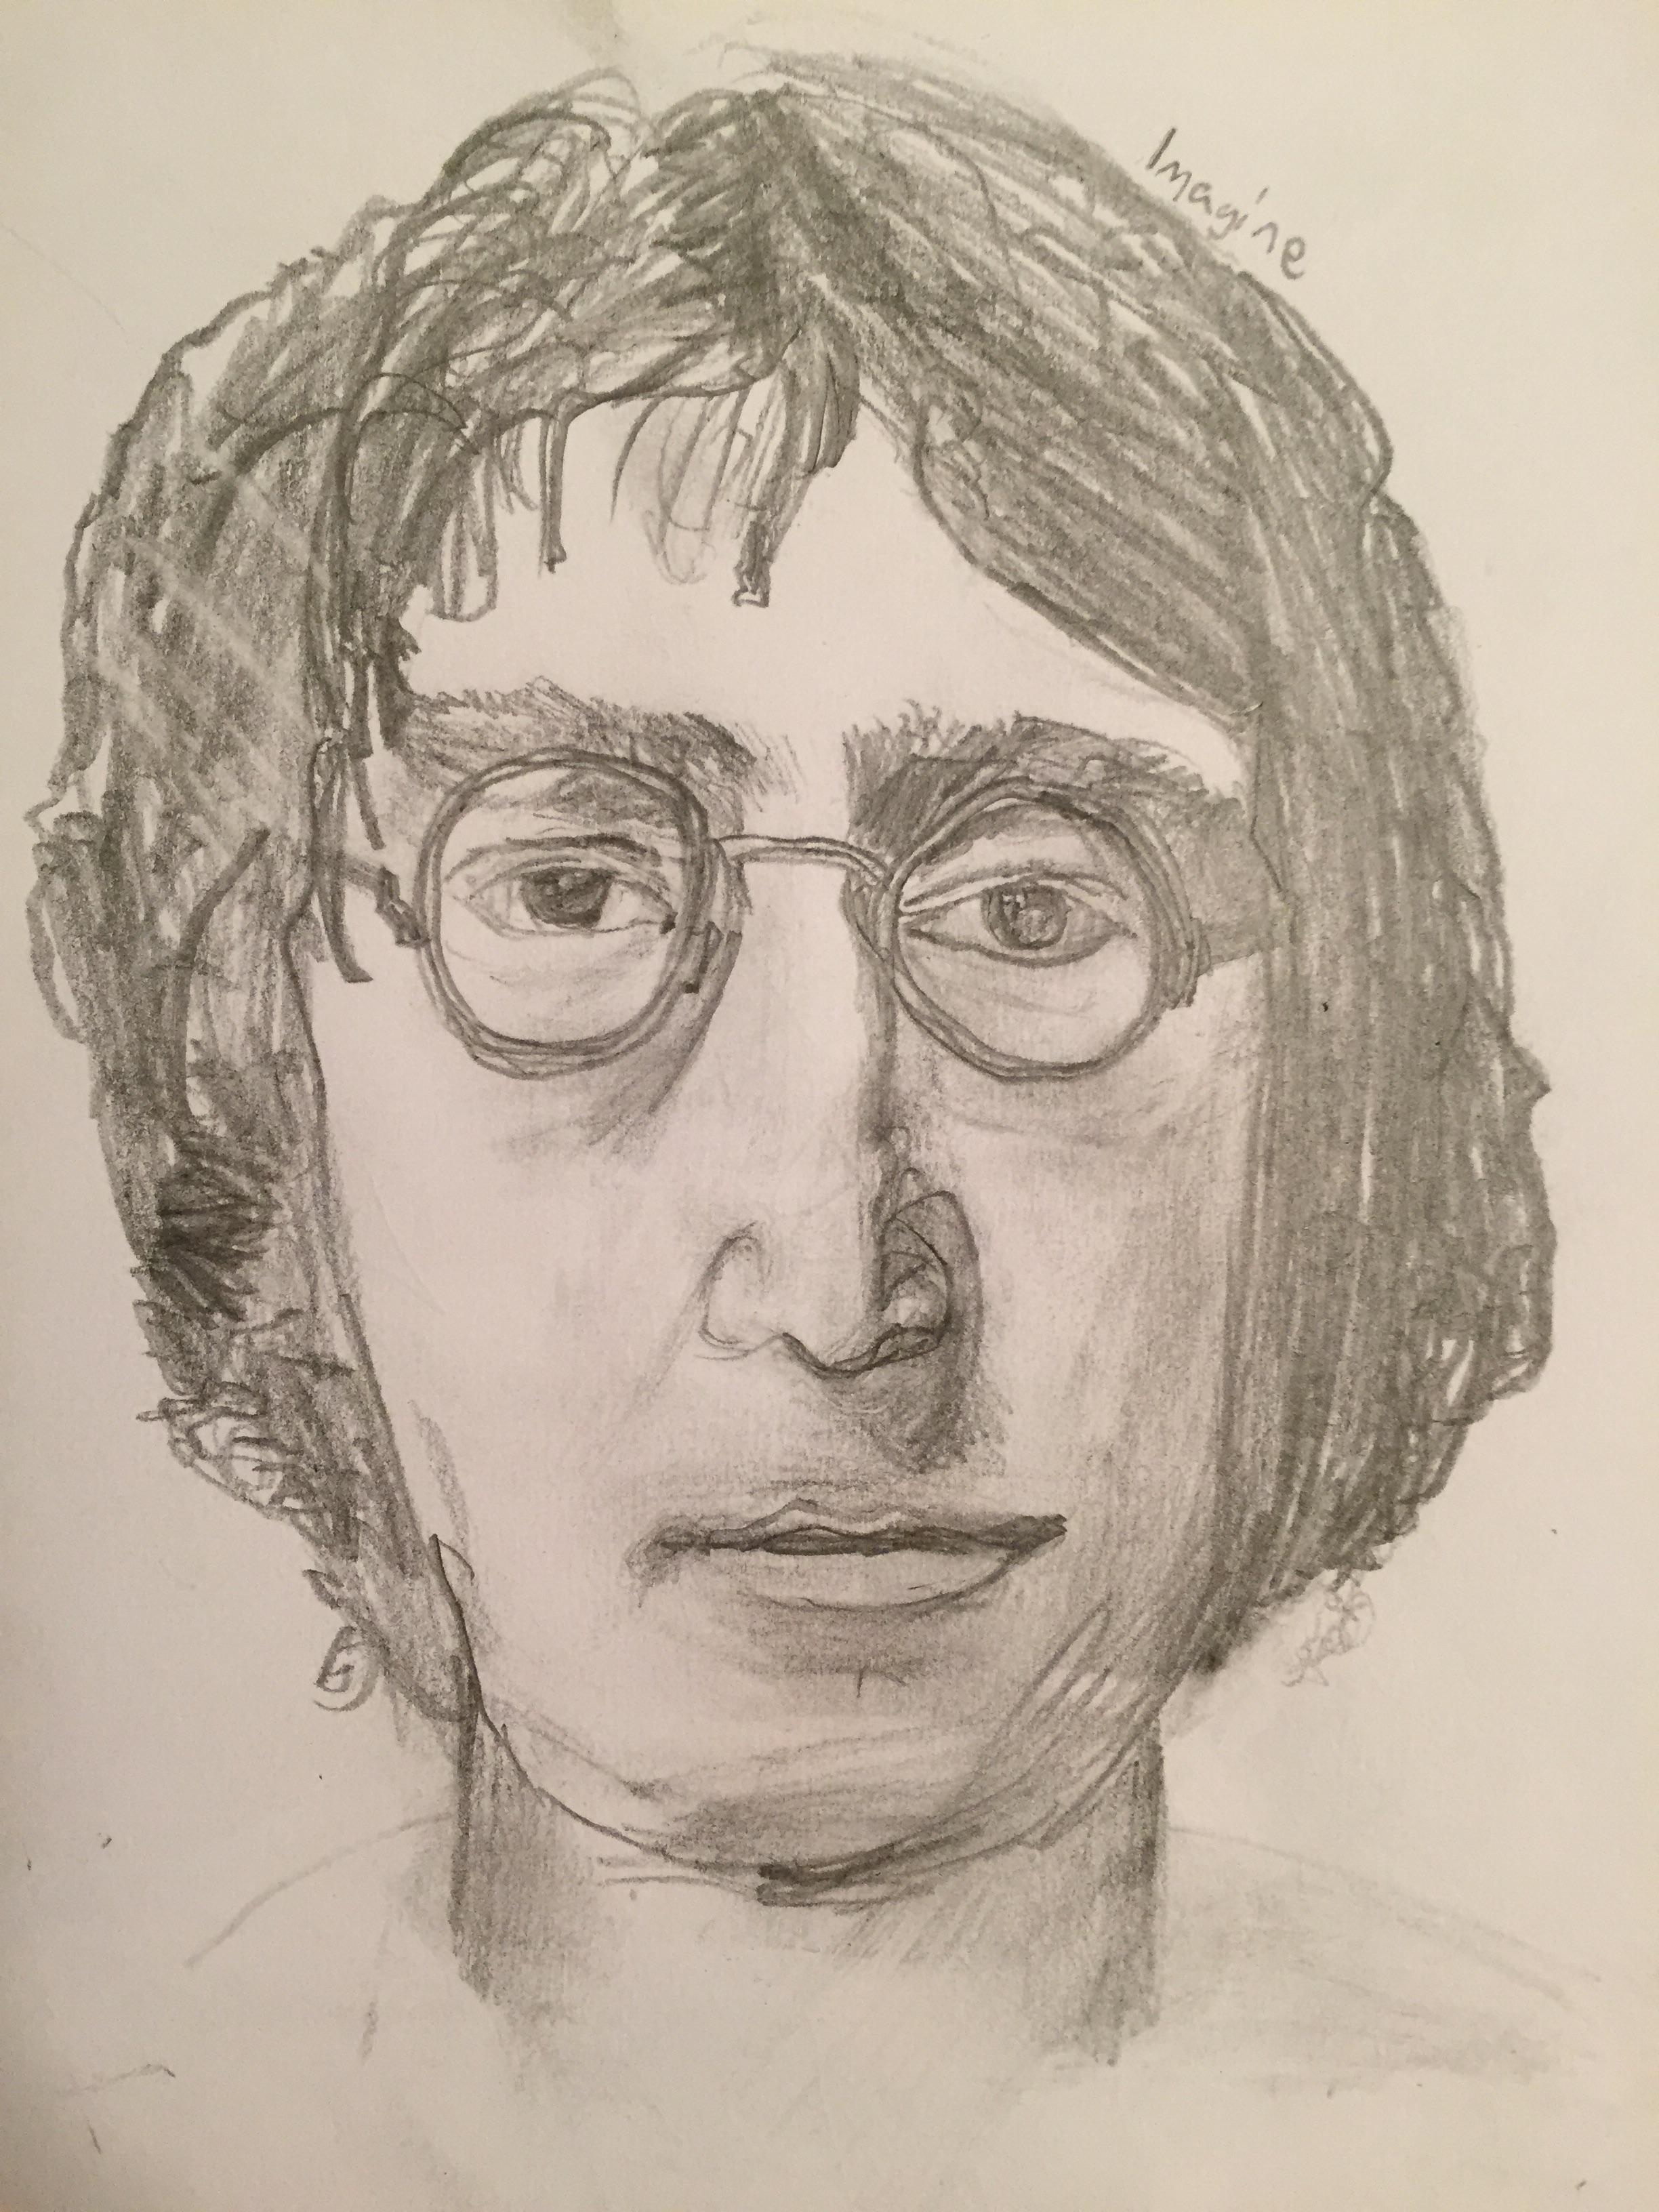 John Lennon Sketch at Explore collection of John